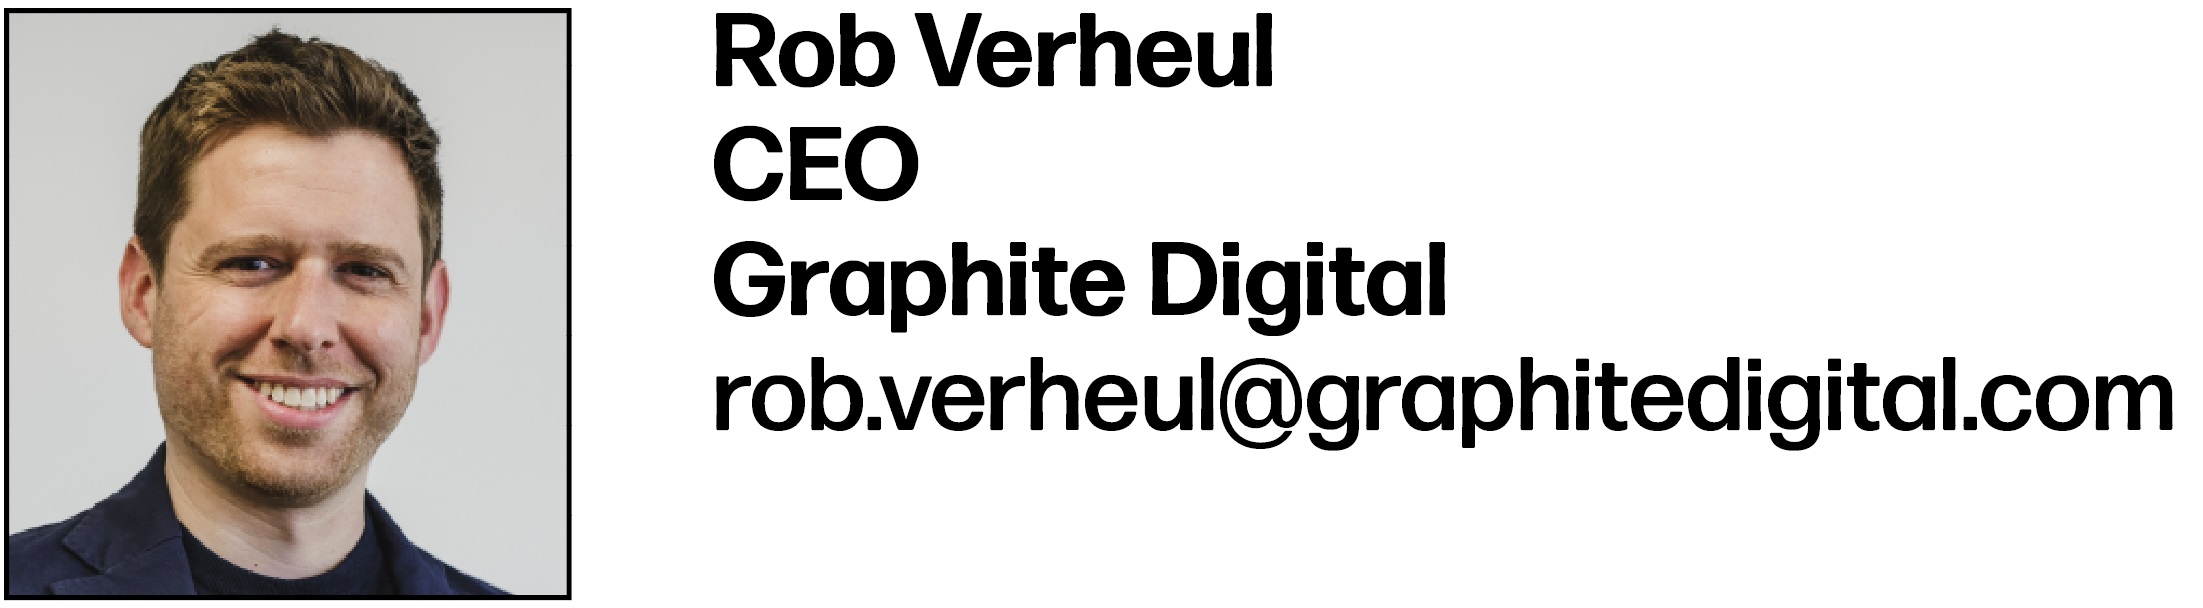 Rob Verheul CEO Graphite Digital rob.verheul@graphitedigital.com 